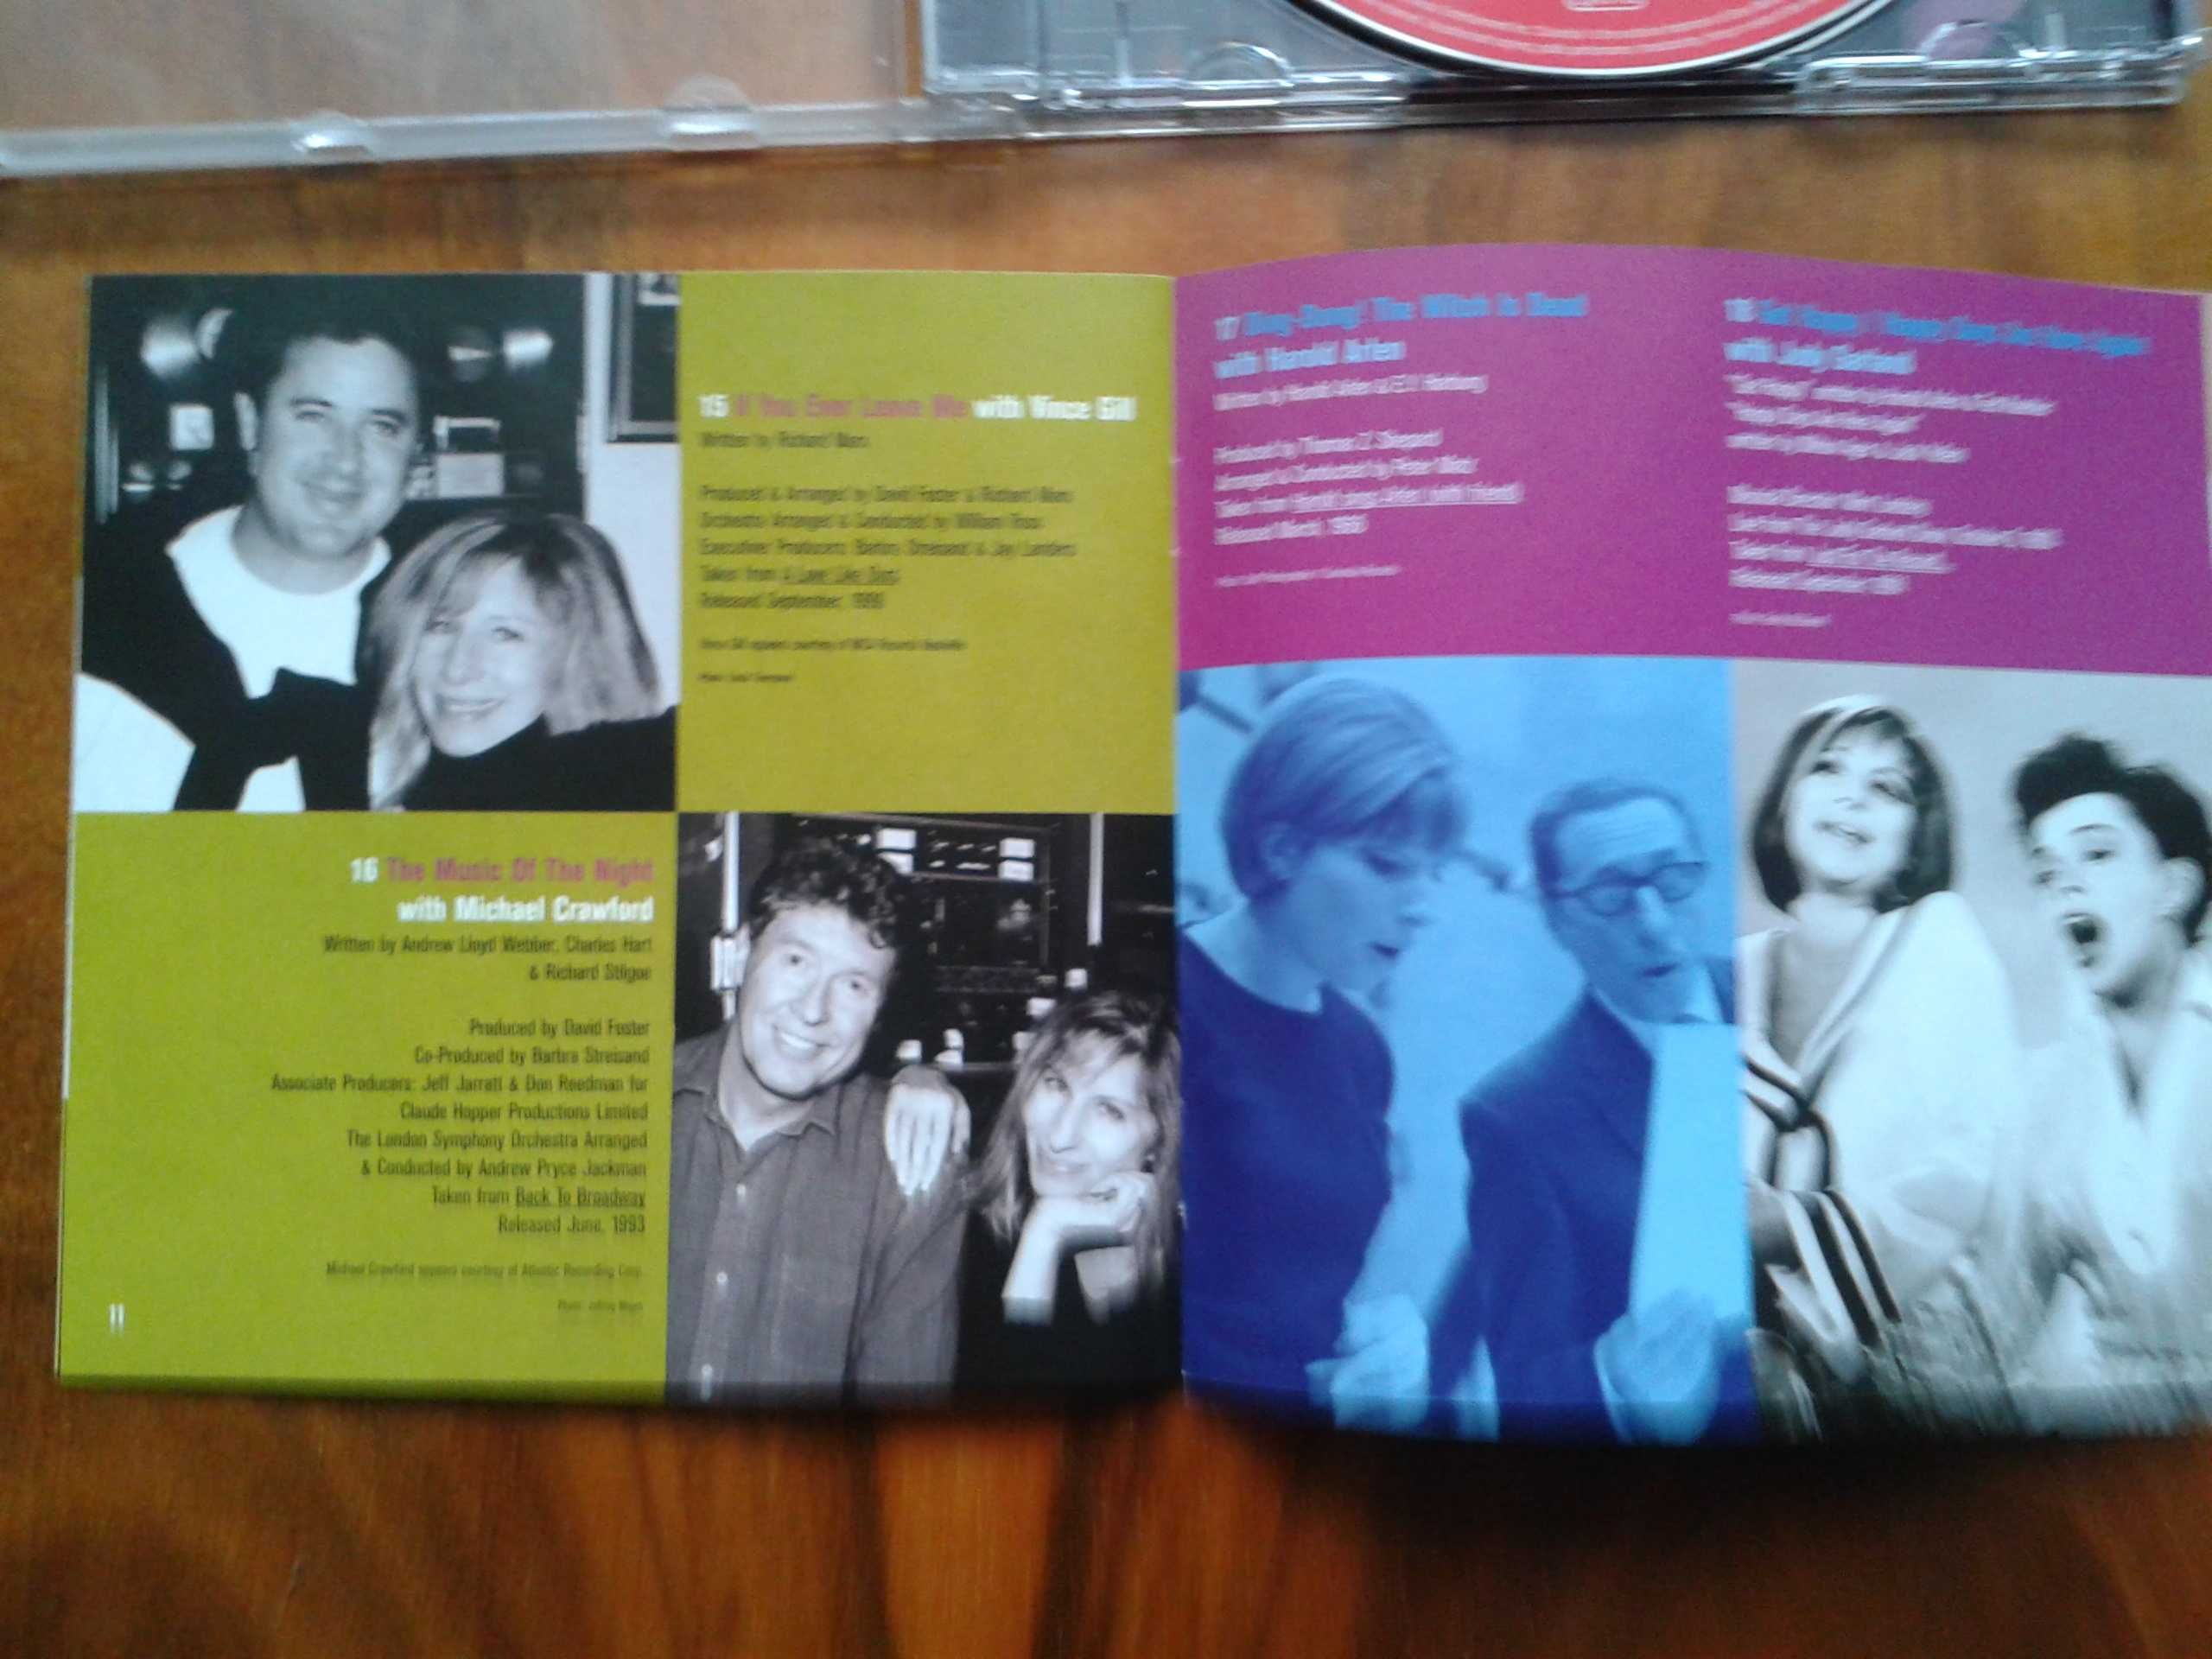 Płyta CD "Duets" Barbra Streisand